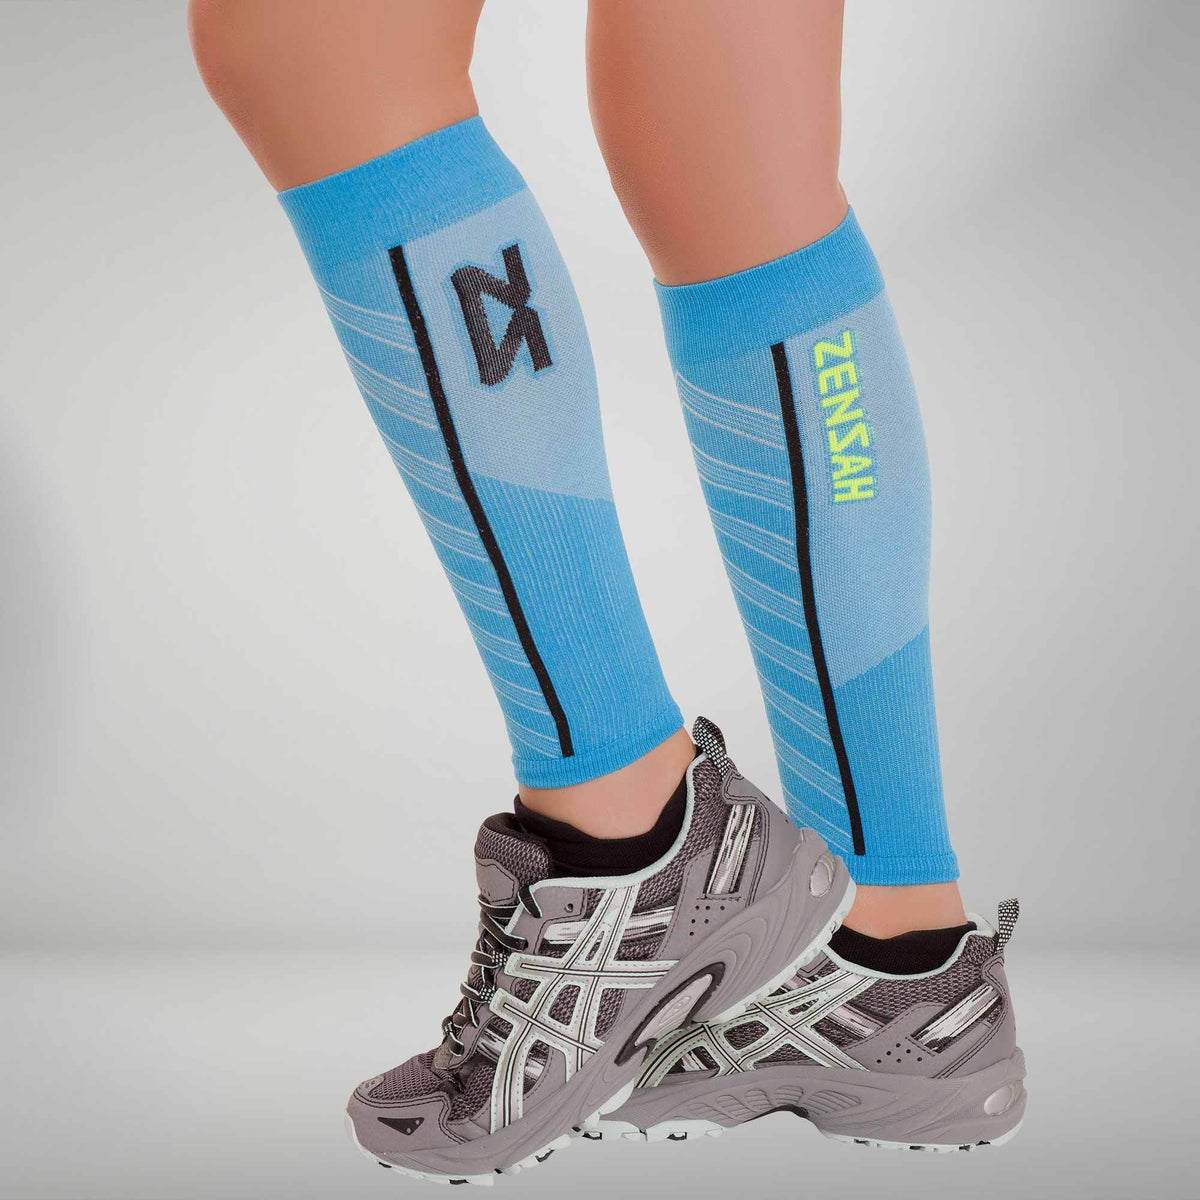 Zensah Ankle/Calf Compression Socks - Quest Outdoors